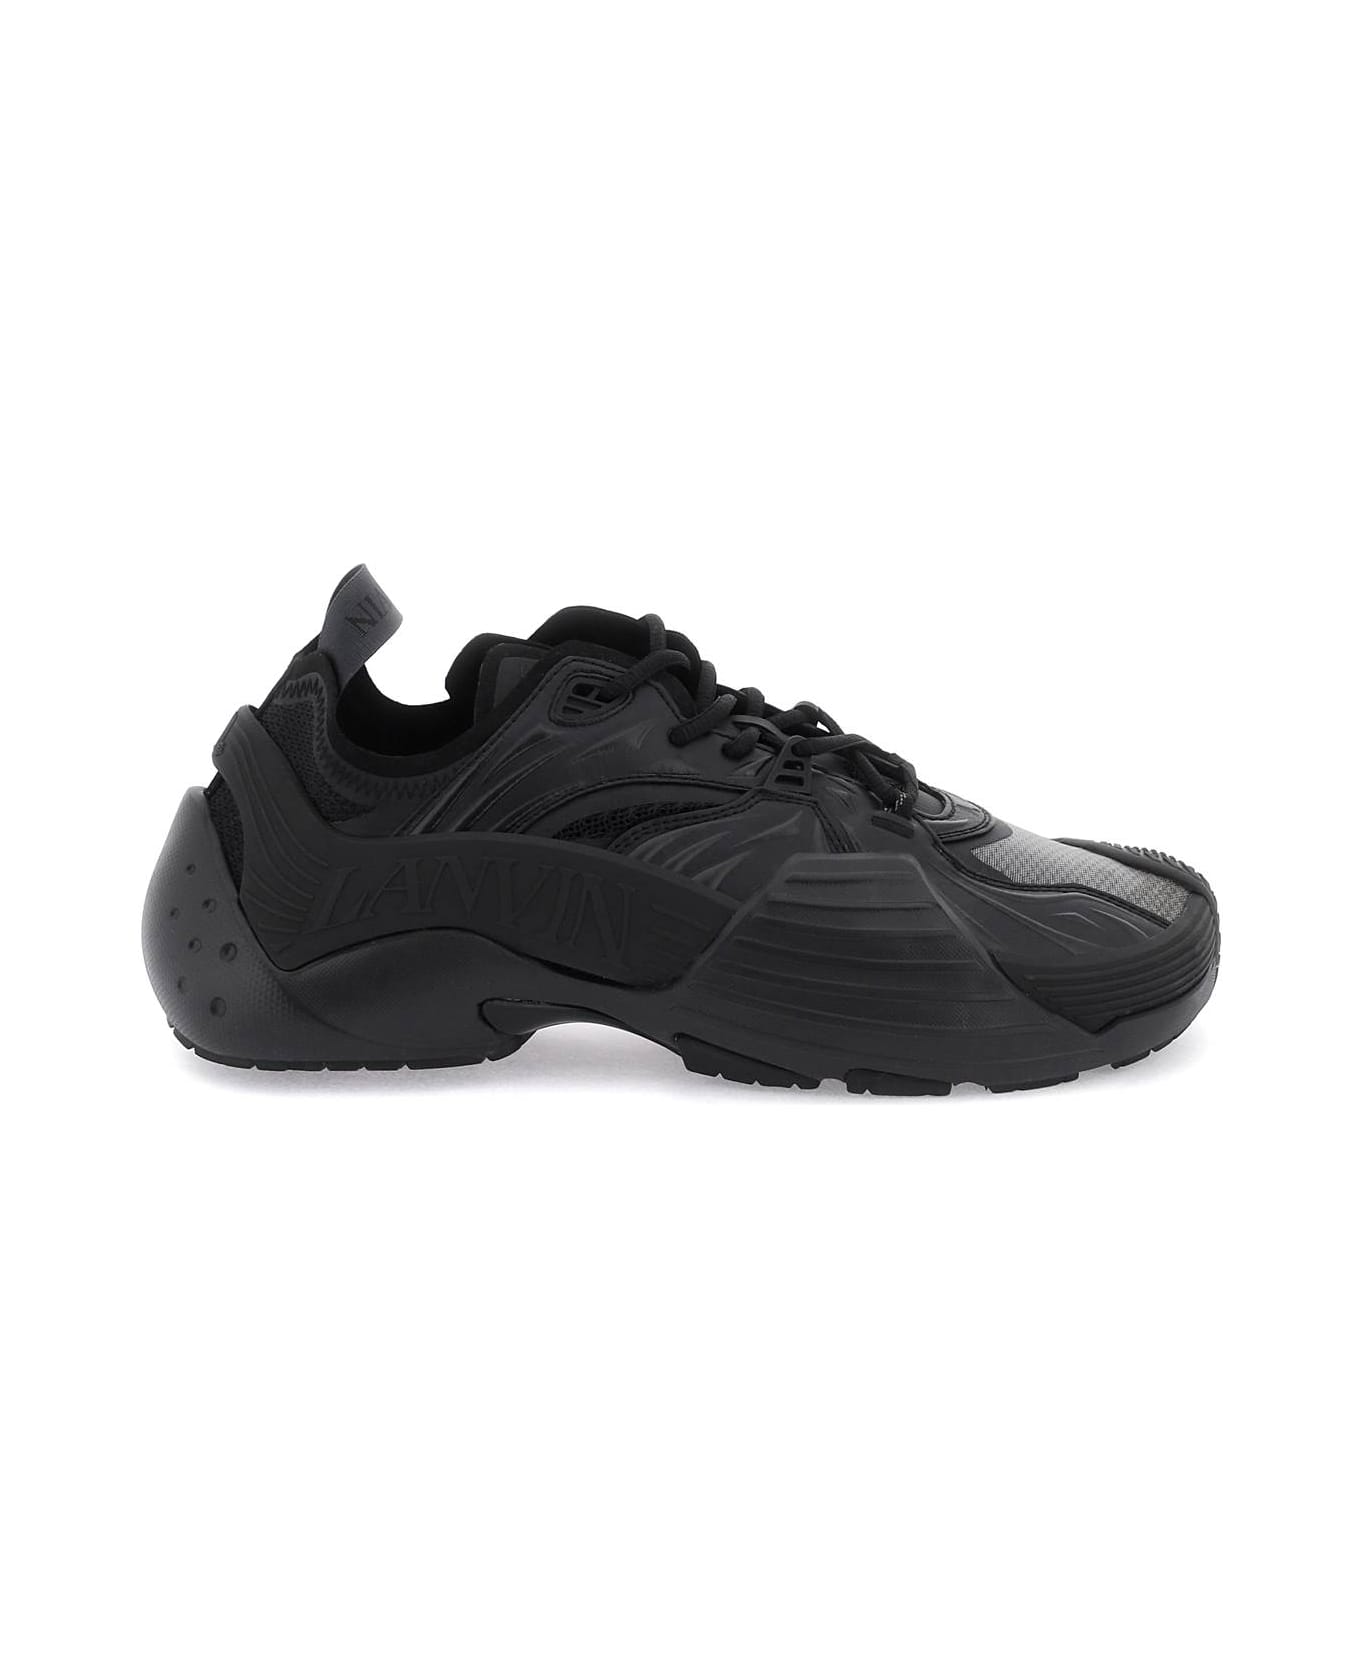 Lanvin Flash-x Sneakers - BLACK (Black)